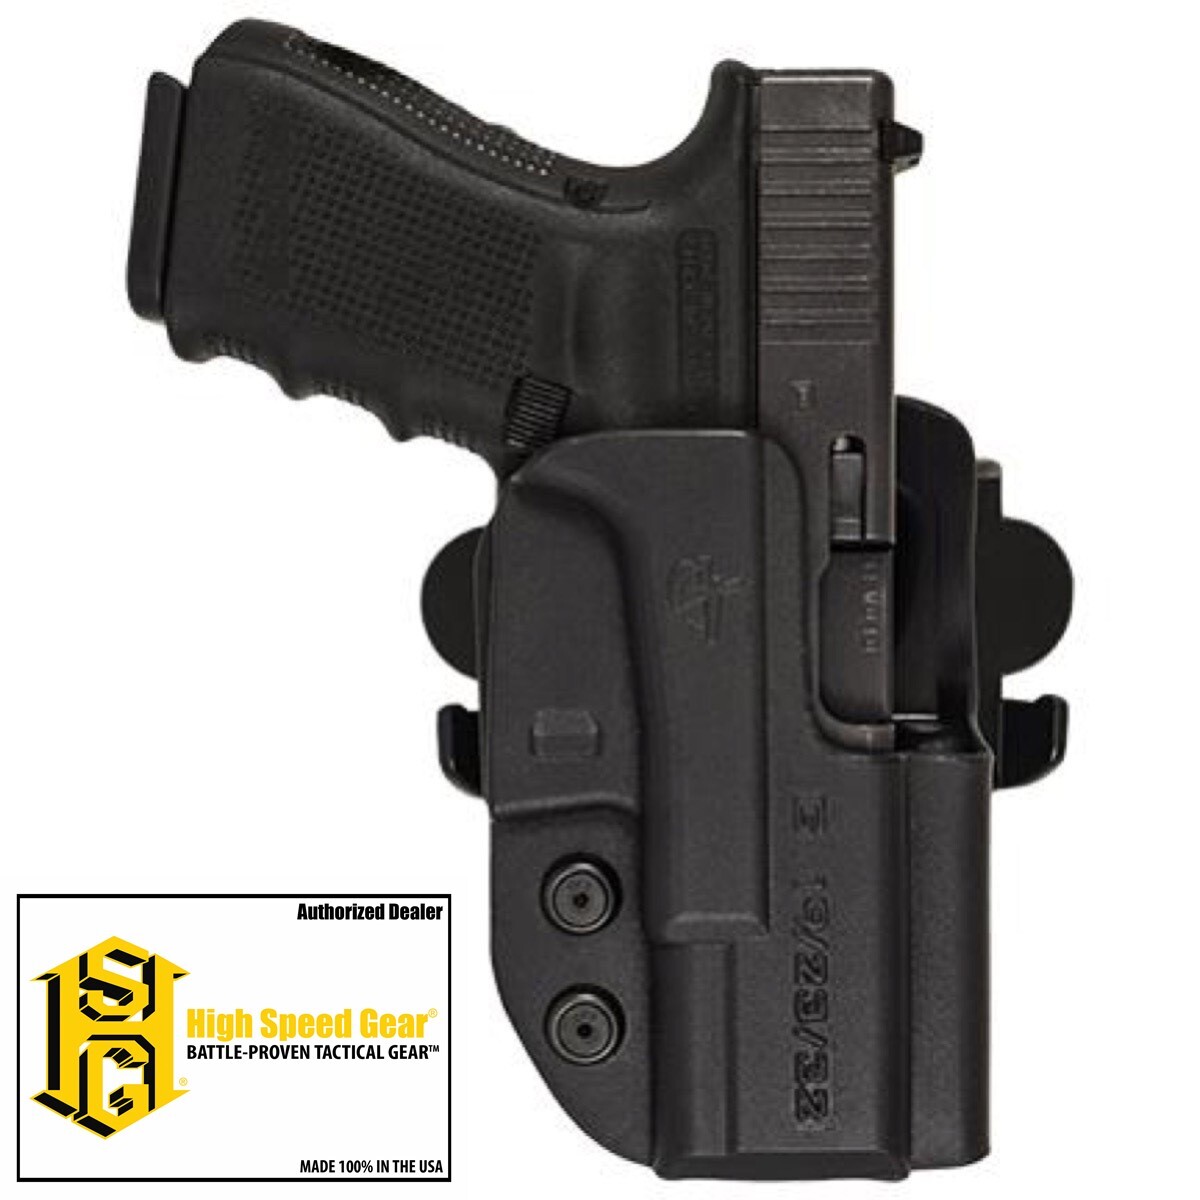 GLOCK Tactical KYDEX QLS Pistol Gun Holster Fits Glock 17 19 20 21 34 45 Walther PPQ 